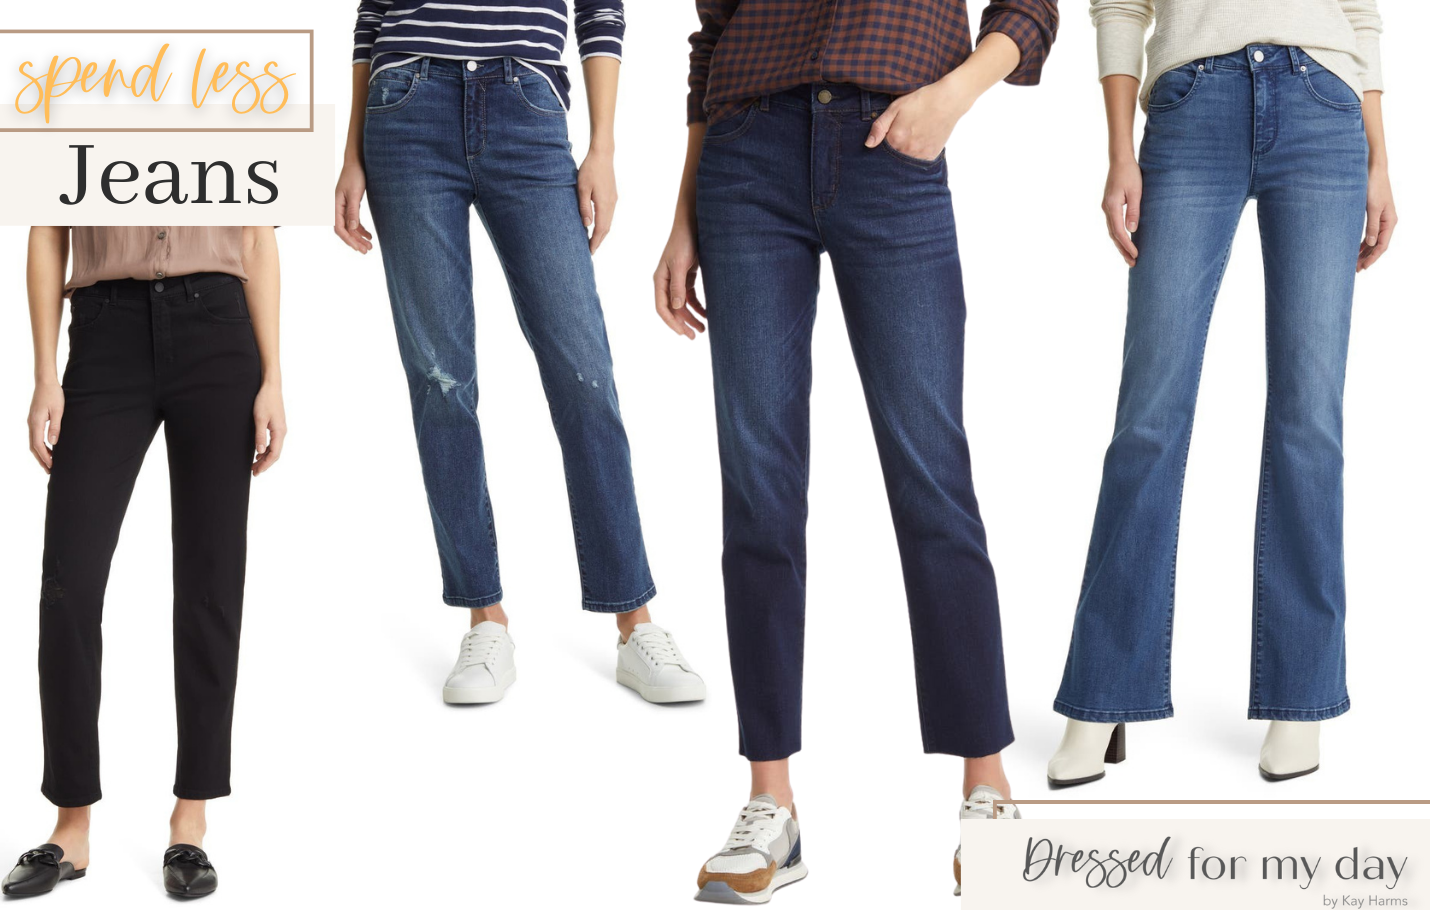 NSale Best Buys Spend Less Women's Jeans